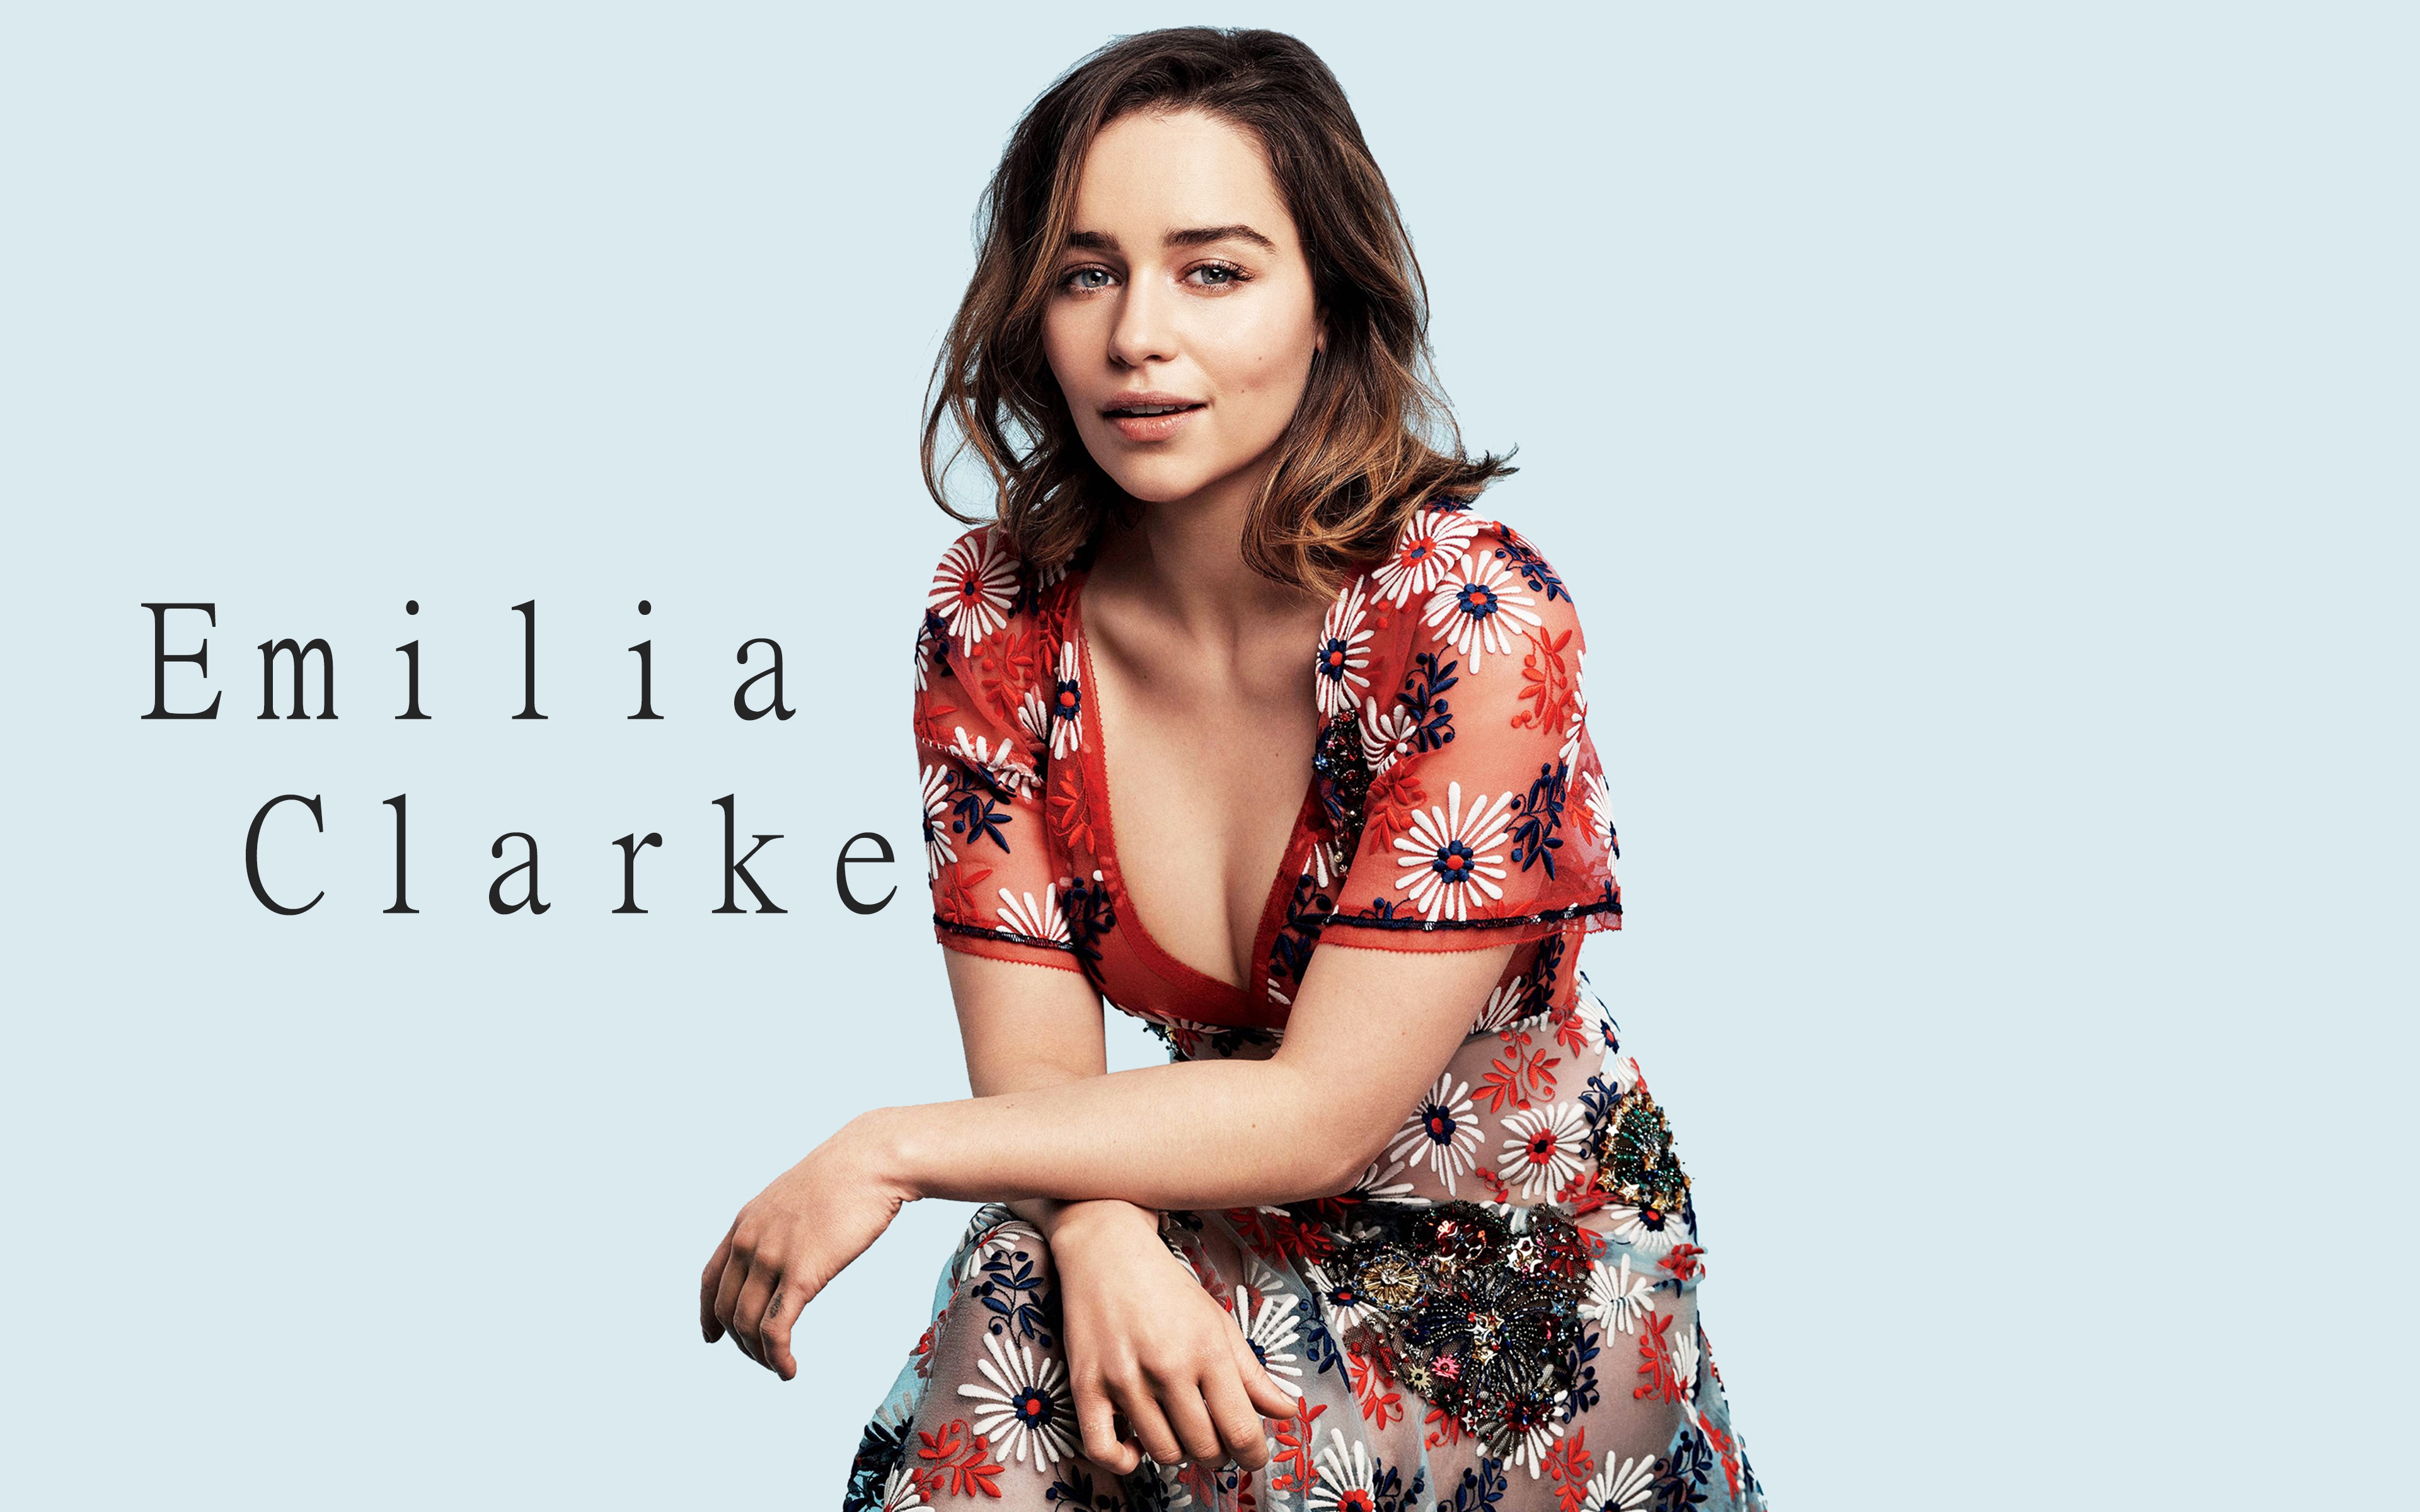 Emilia Clarke 2017 for 3840 x 2400 4K Retina Display resolution